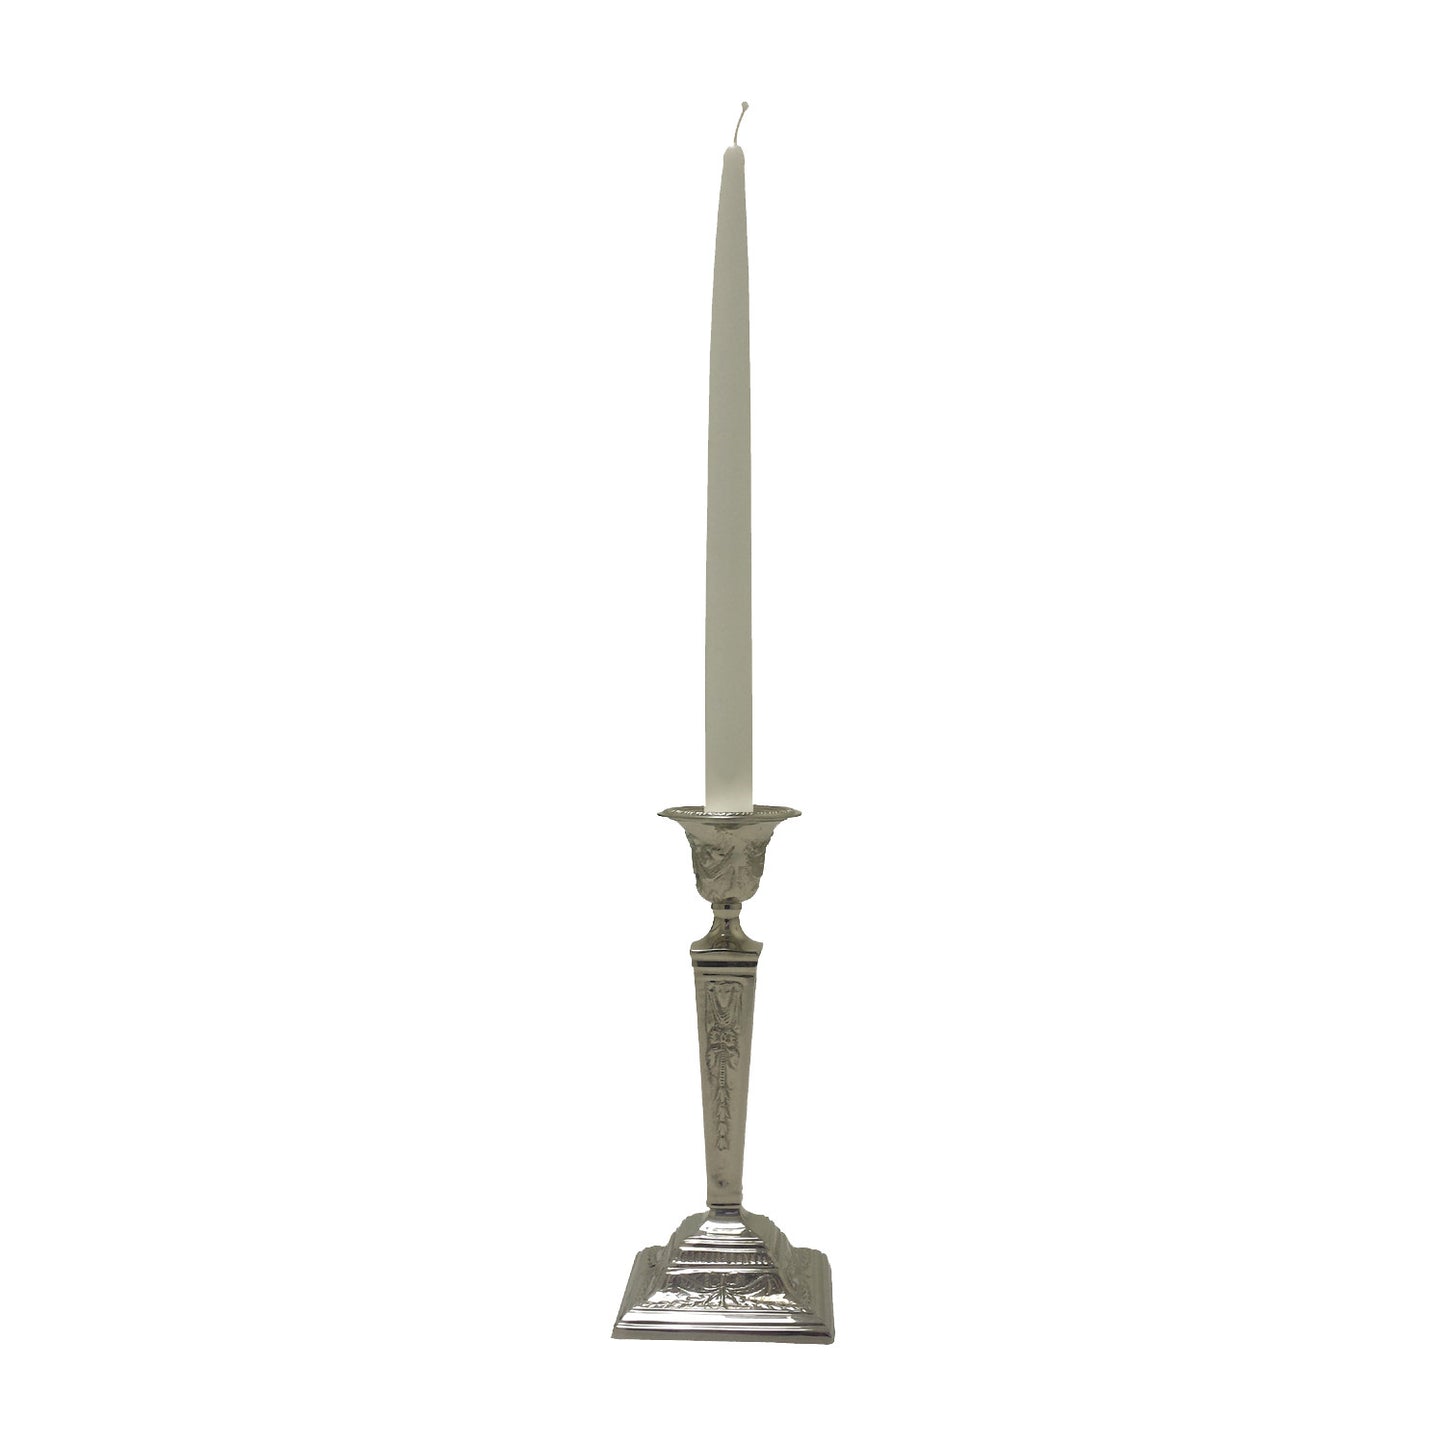 GiftBay 1012-B Candlestick Holder, Silver Finish, 9.5"h